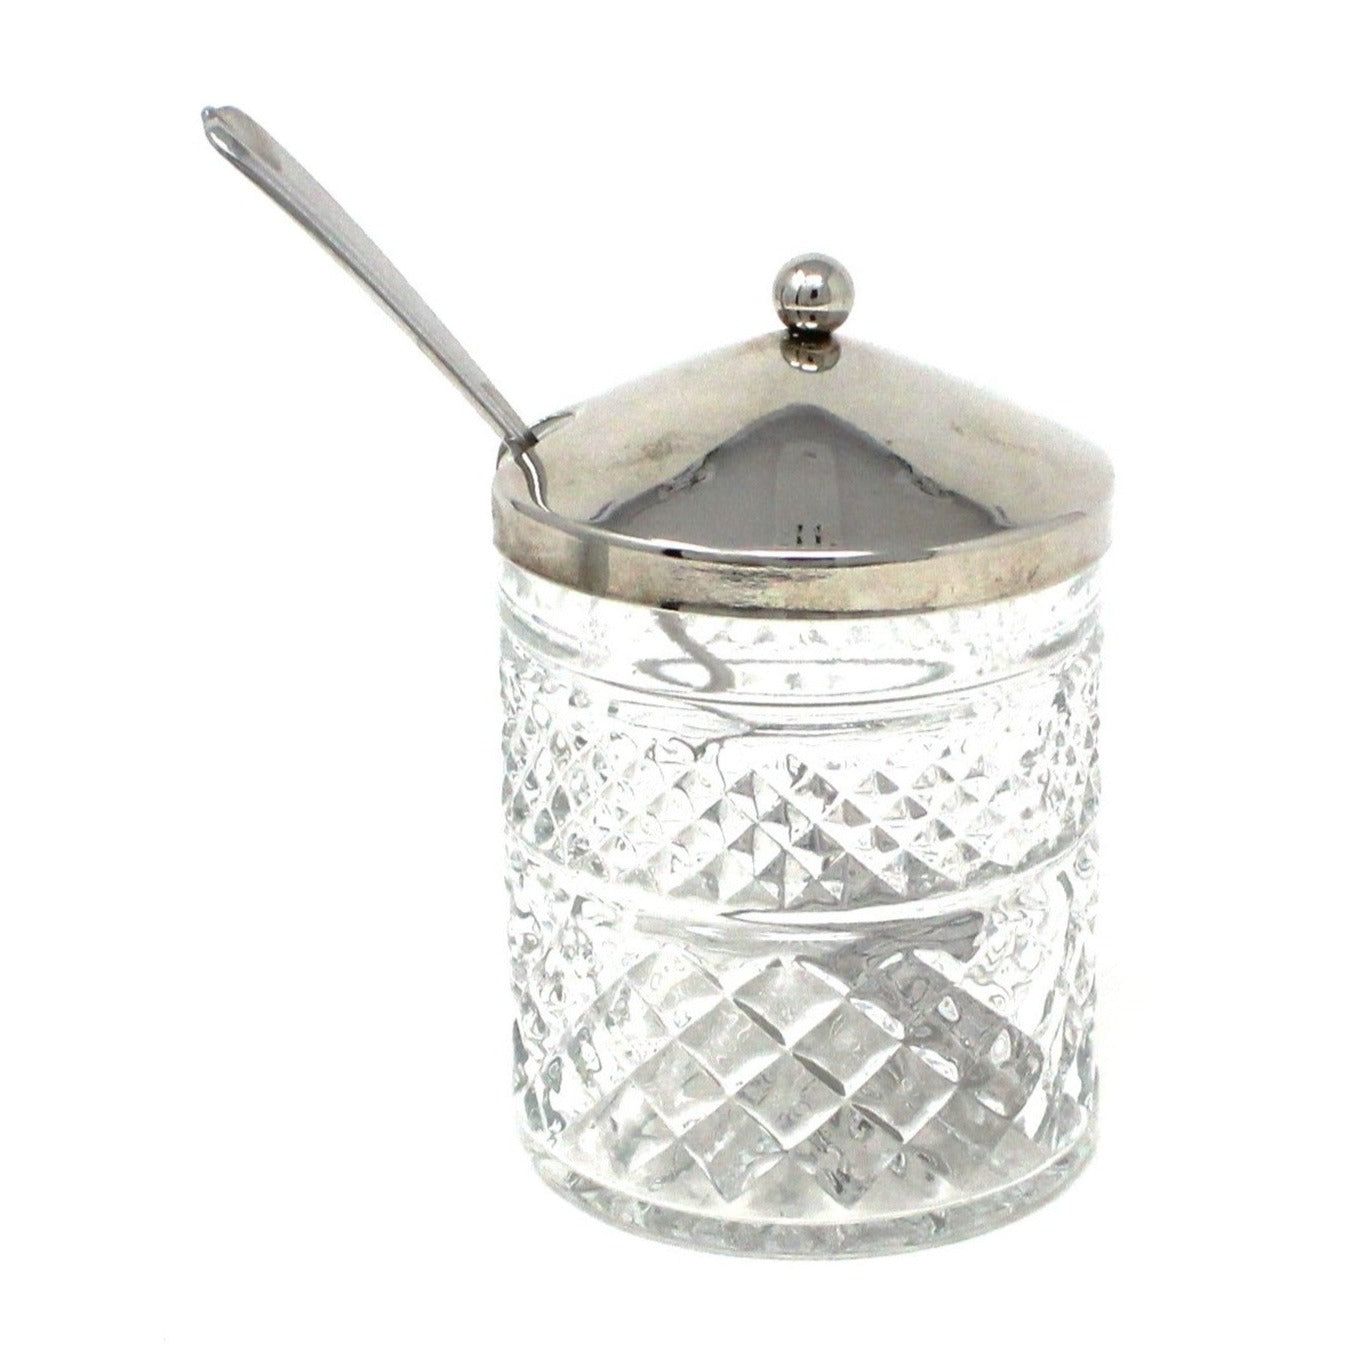 Condiment Jar, KIG, Wexford Glass Jam / Jelly Jar with Metal Lid and Spoon, Vintage